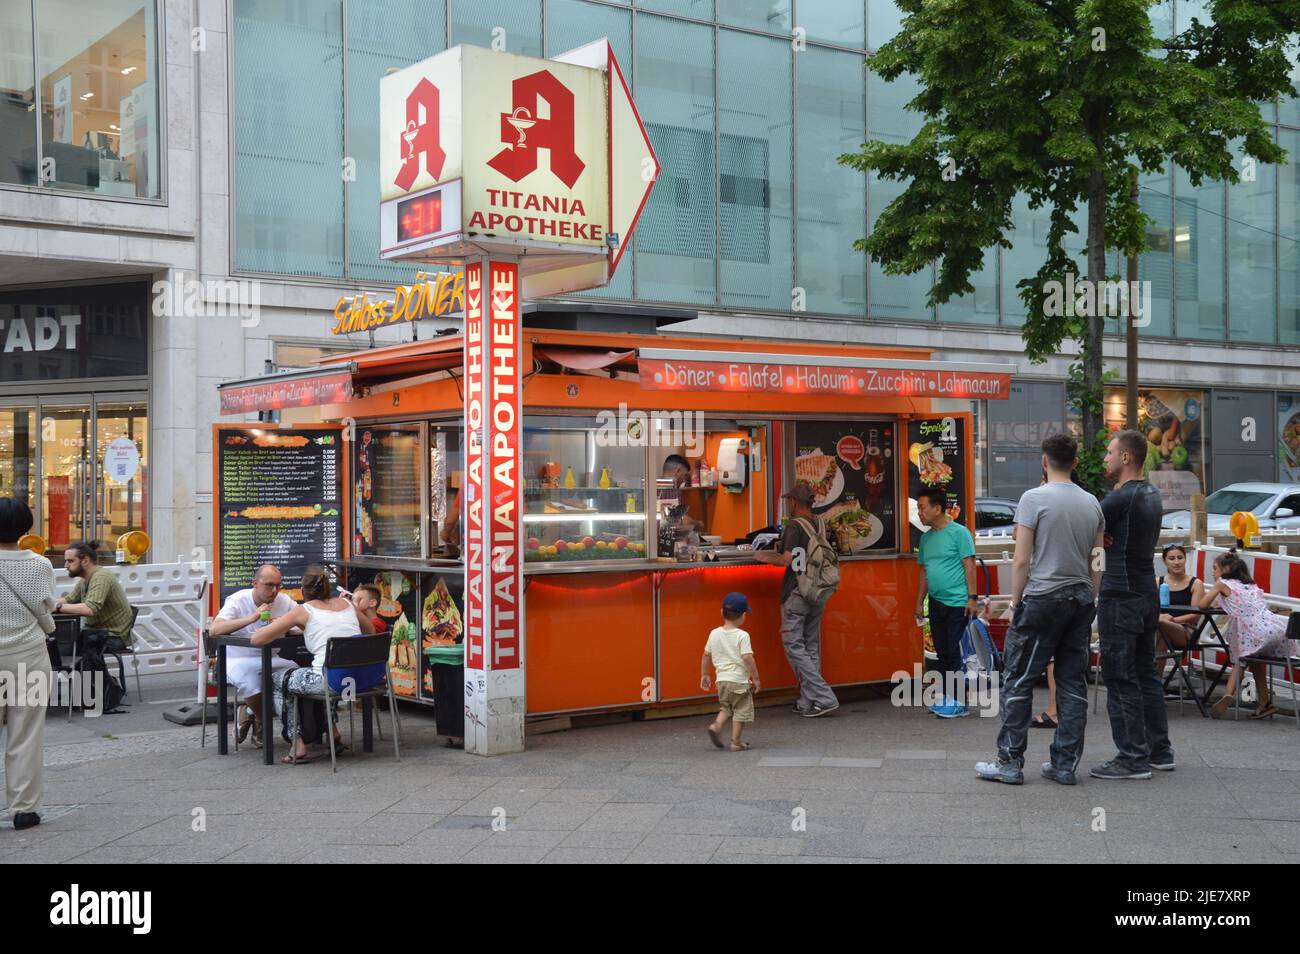 Berlin, Allemagne - 24 juin 2022 - Doener kebab stall à Markelstrasse, Schlossstrasse dans la localité de Steglitz. (Photo de Markku Rainer Peltonen) Banque D'Images